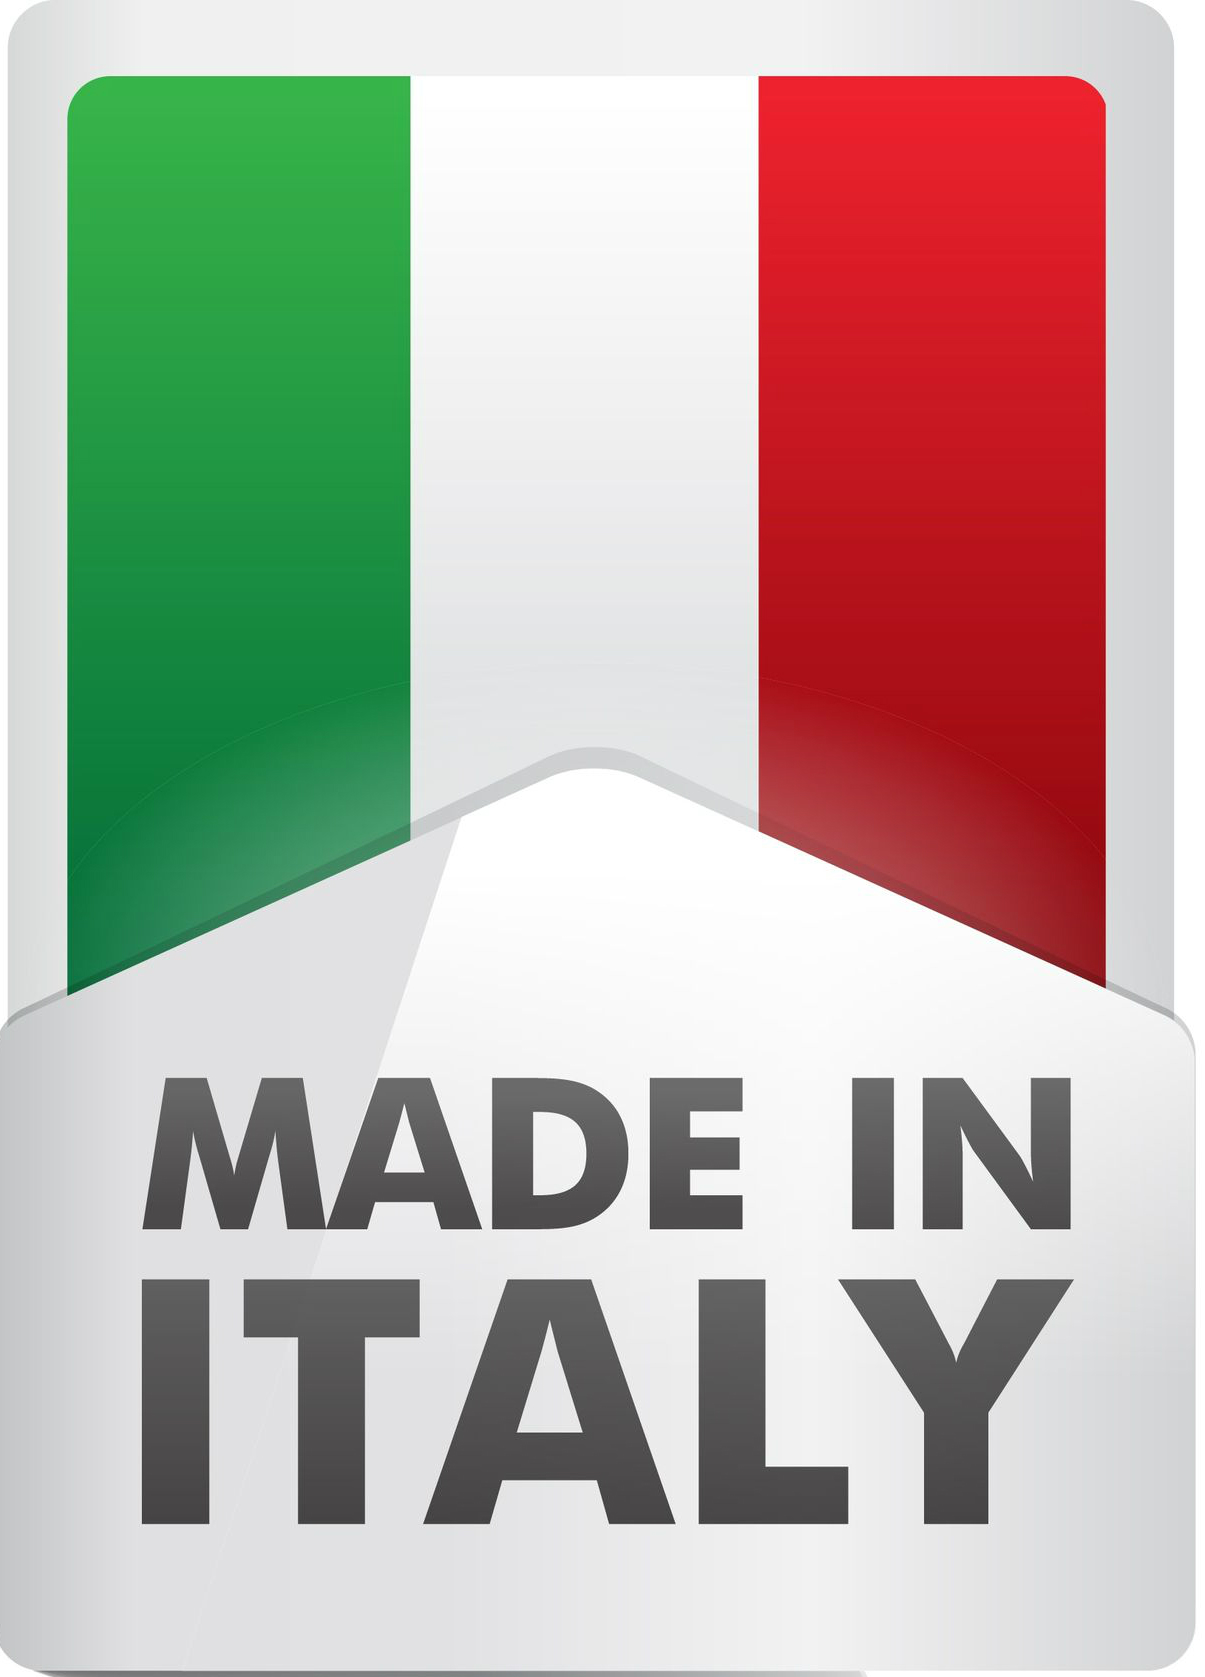 Famous Italian Logos